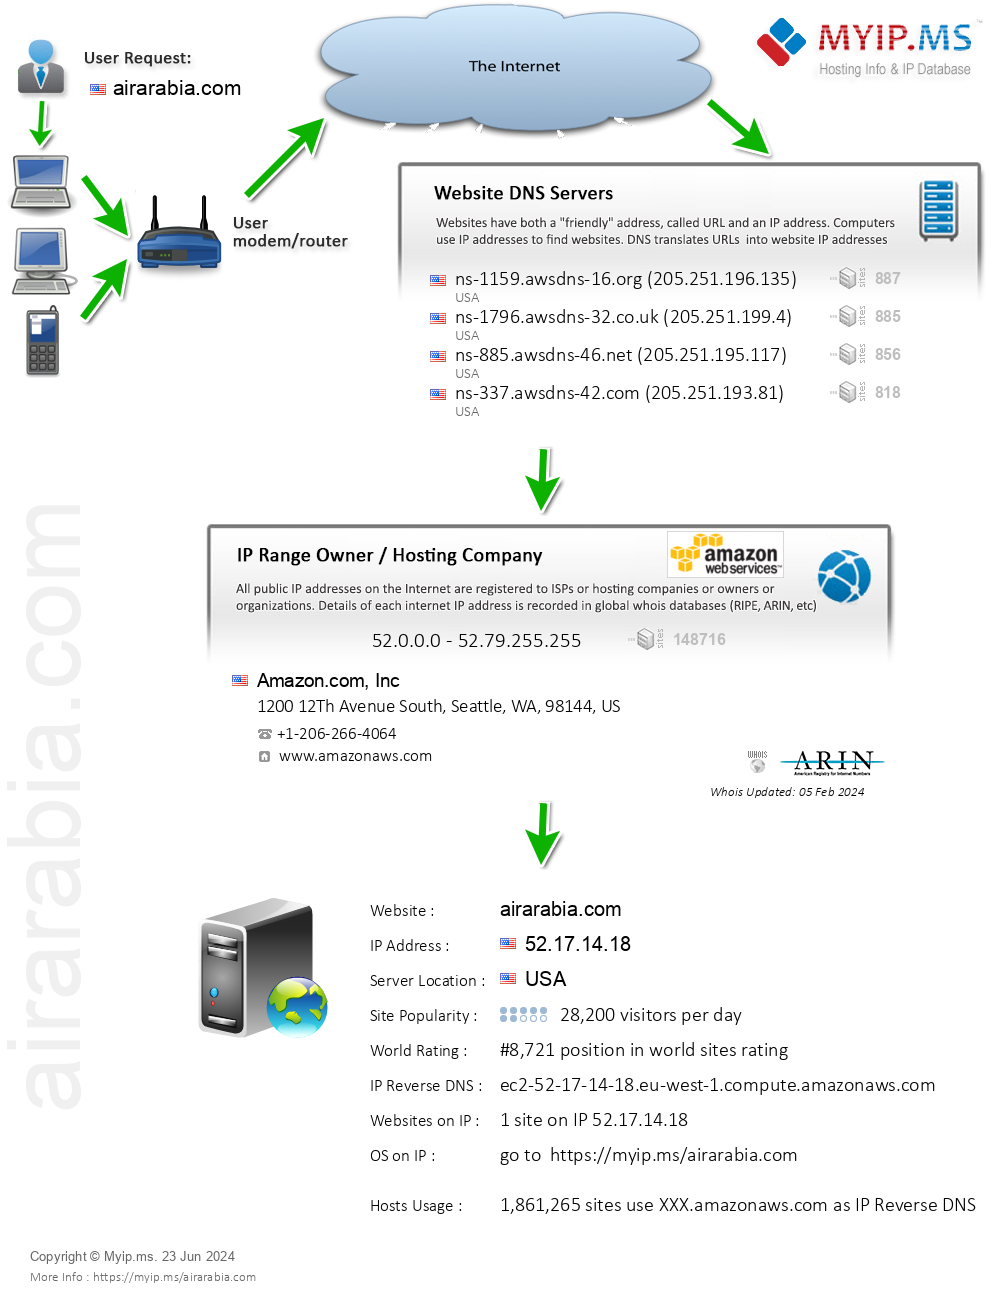 Airarabia.com - Website Hosting Visual IP Diagram